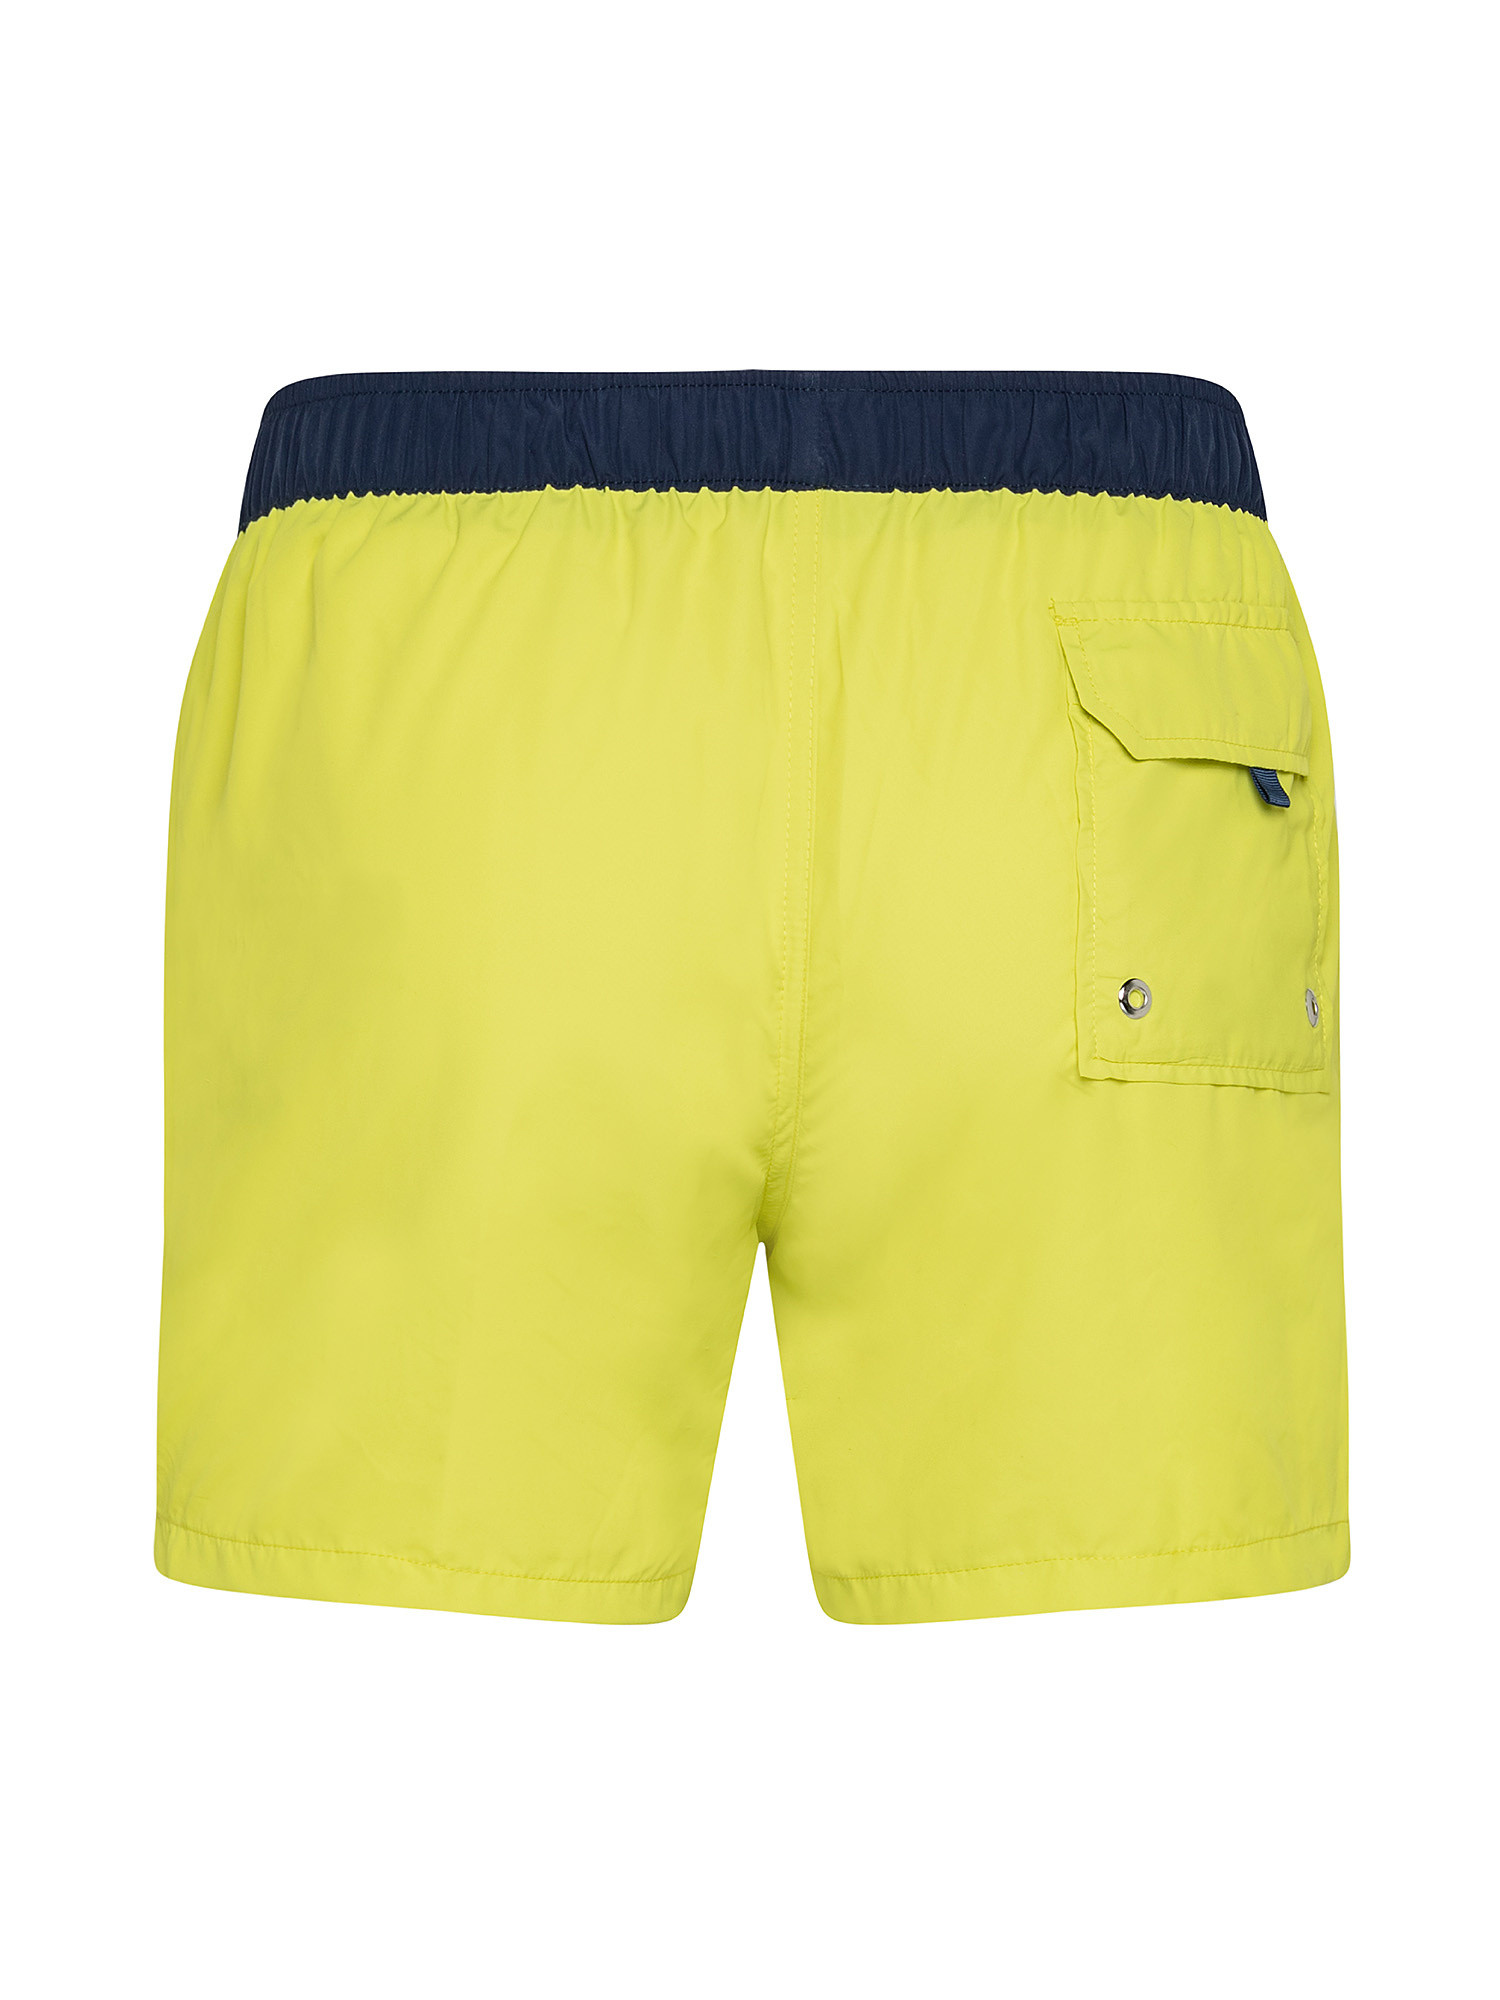 Nylon swim shorts with regular fit drawstring, Yellow, large image number 1